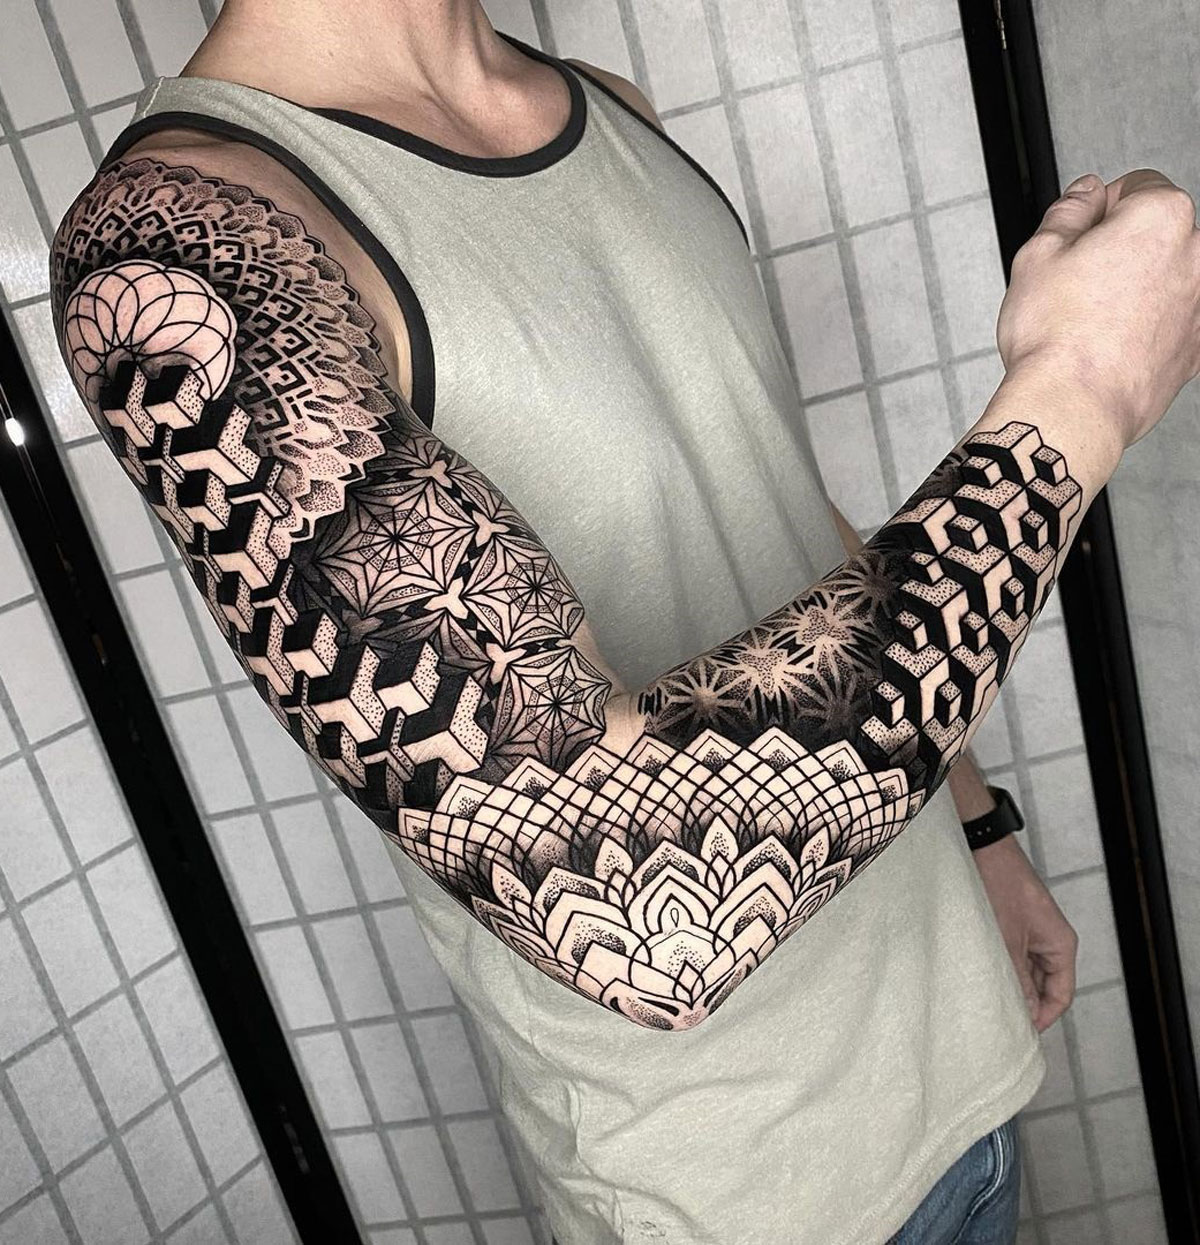 40+ Geometric Tattoo Designs For Men And Women - TattooBlend